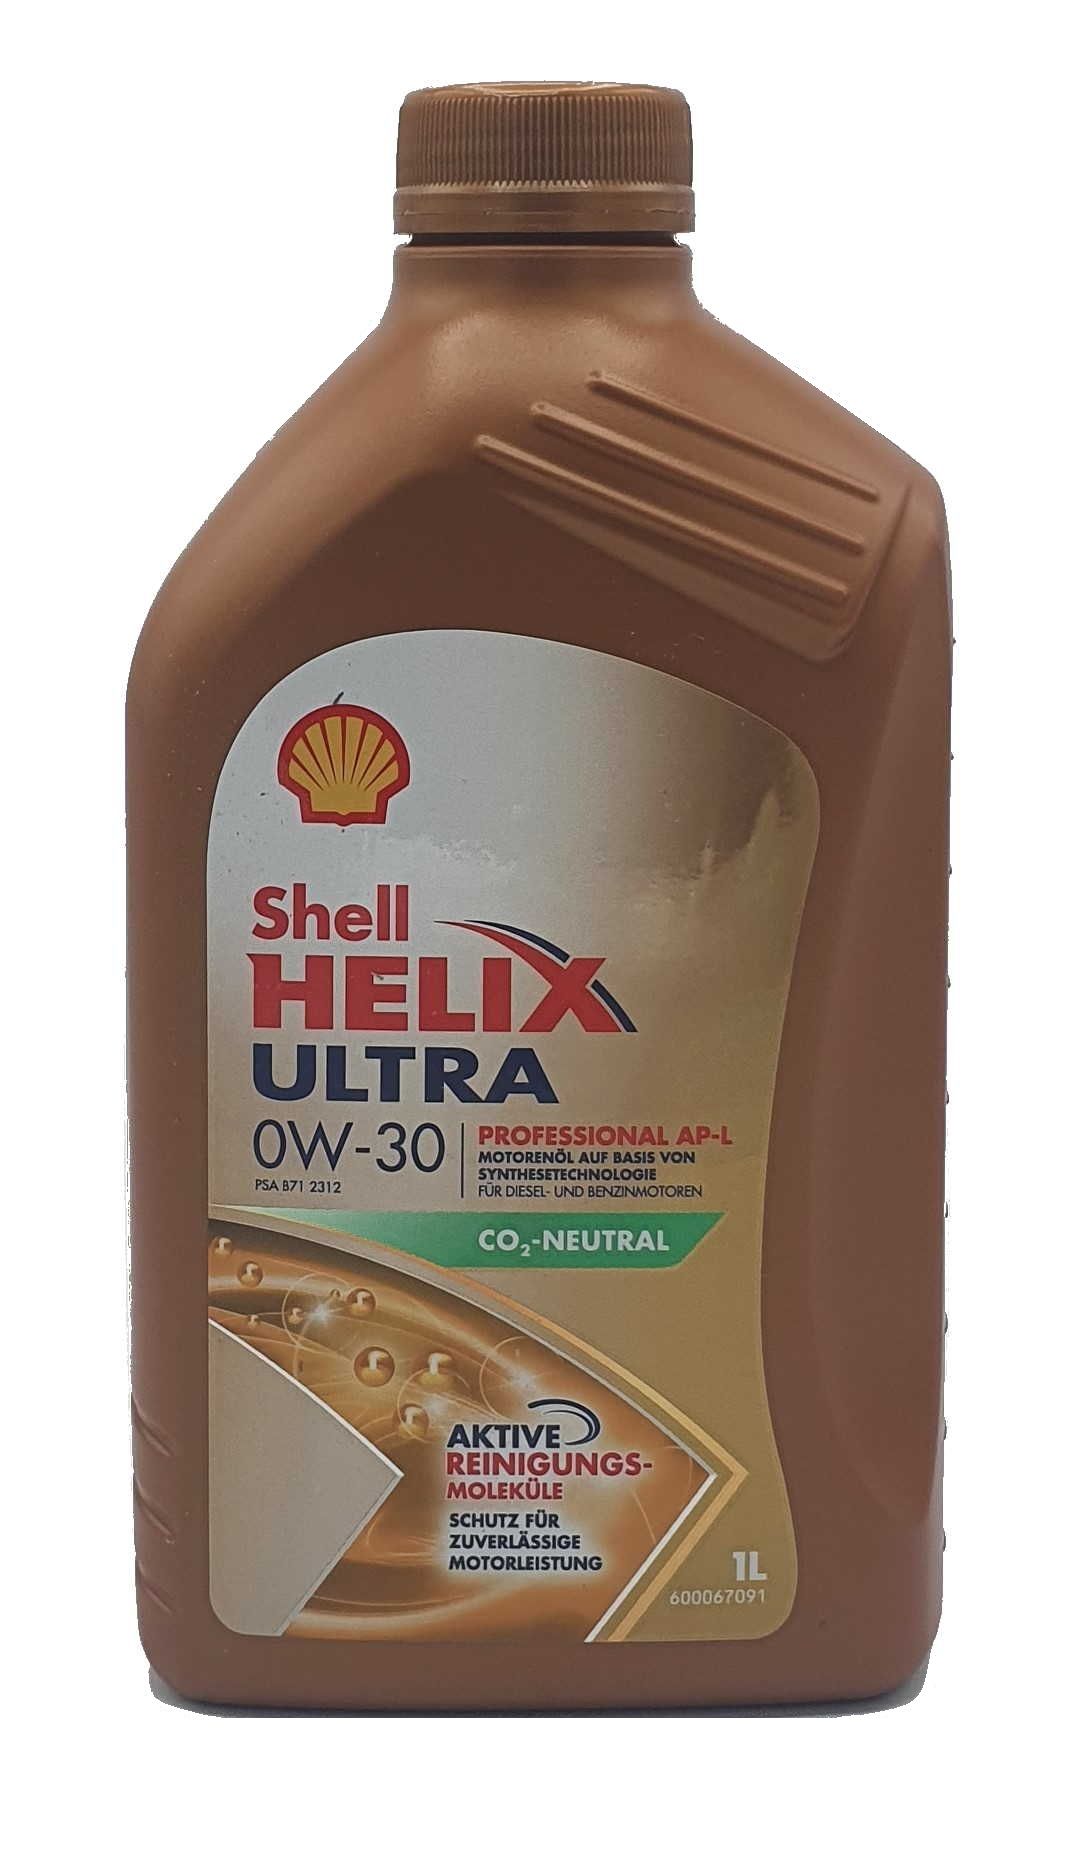 Shell Helix Ultra Professional AP-L 0W-30 1 Liter